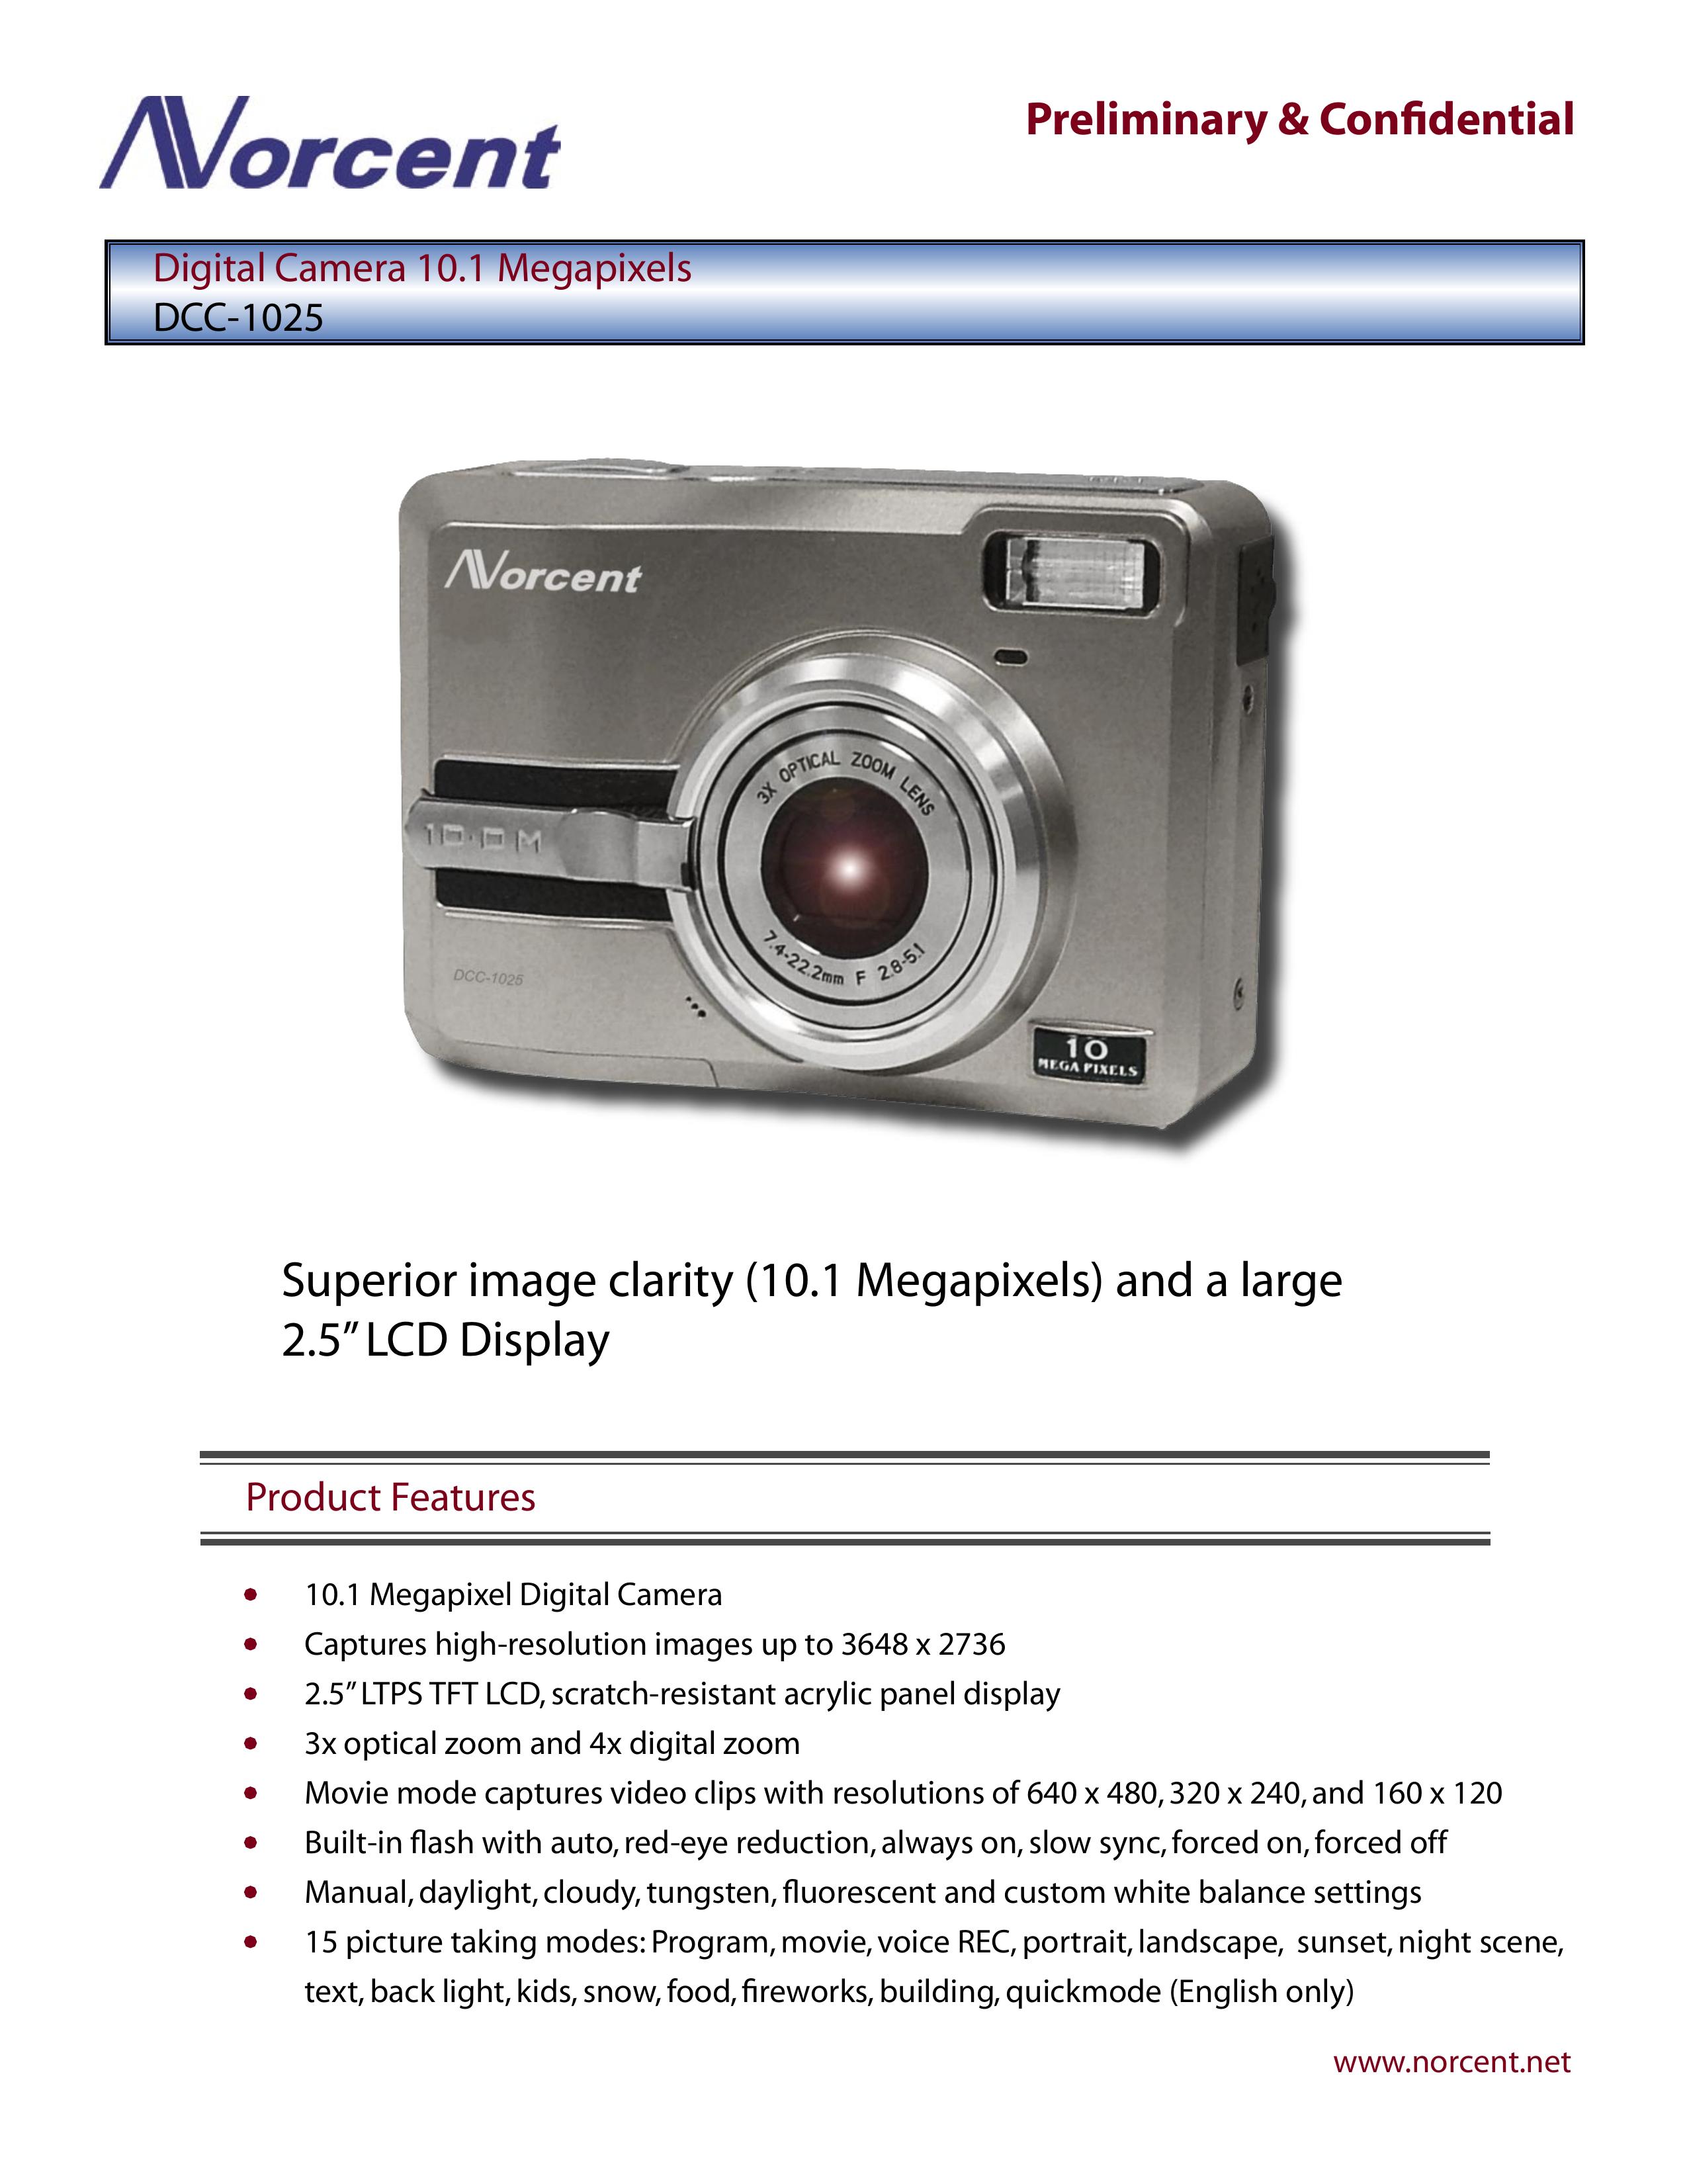 Norcent Technologies DCC-1025 Digital Camera User Manual